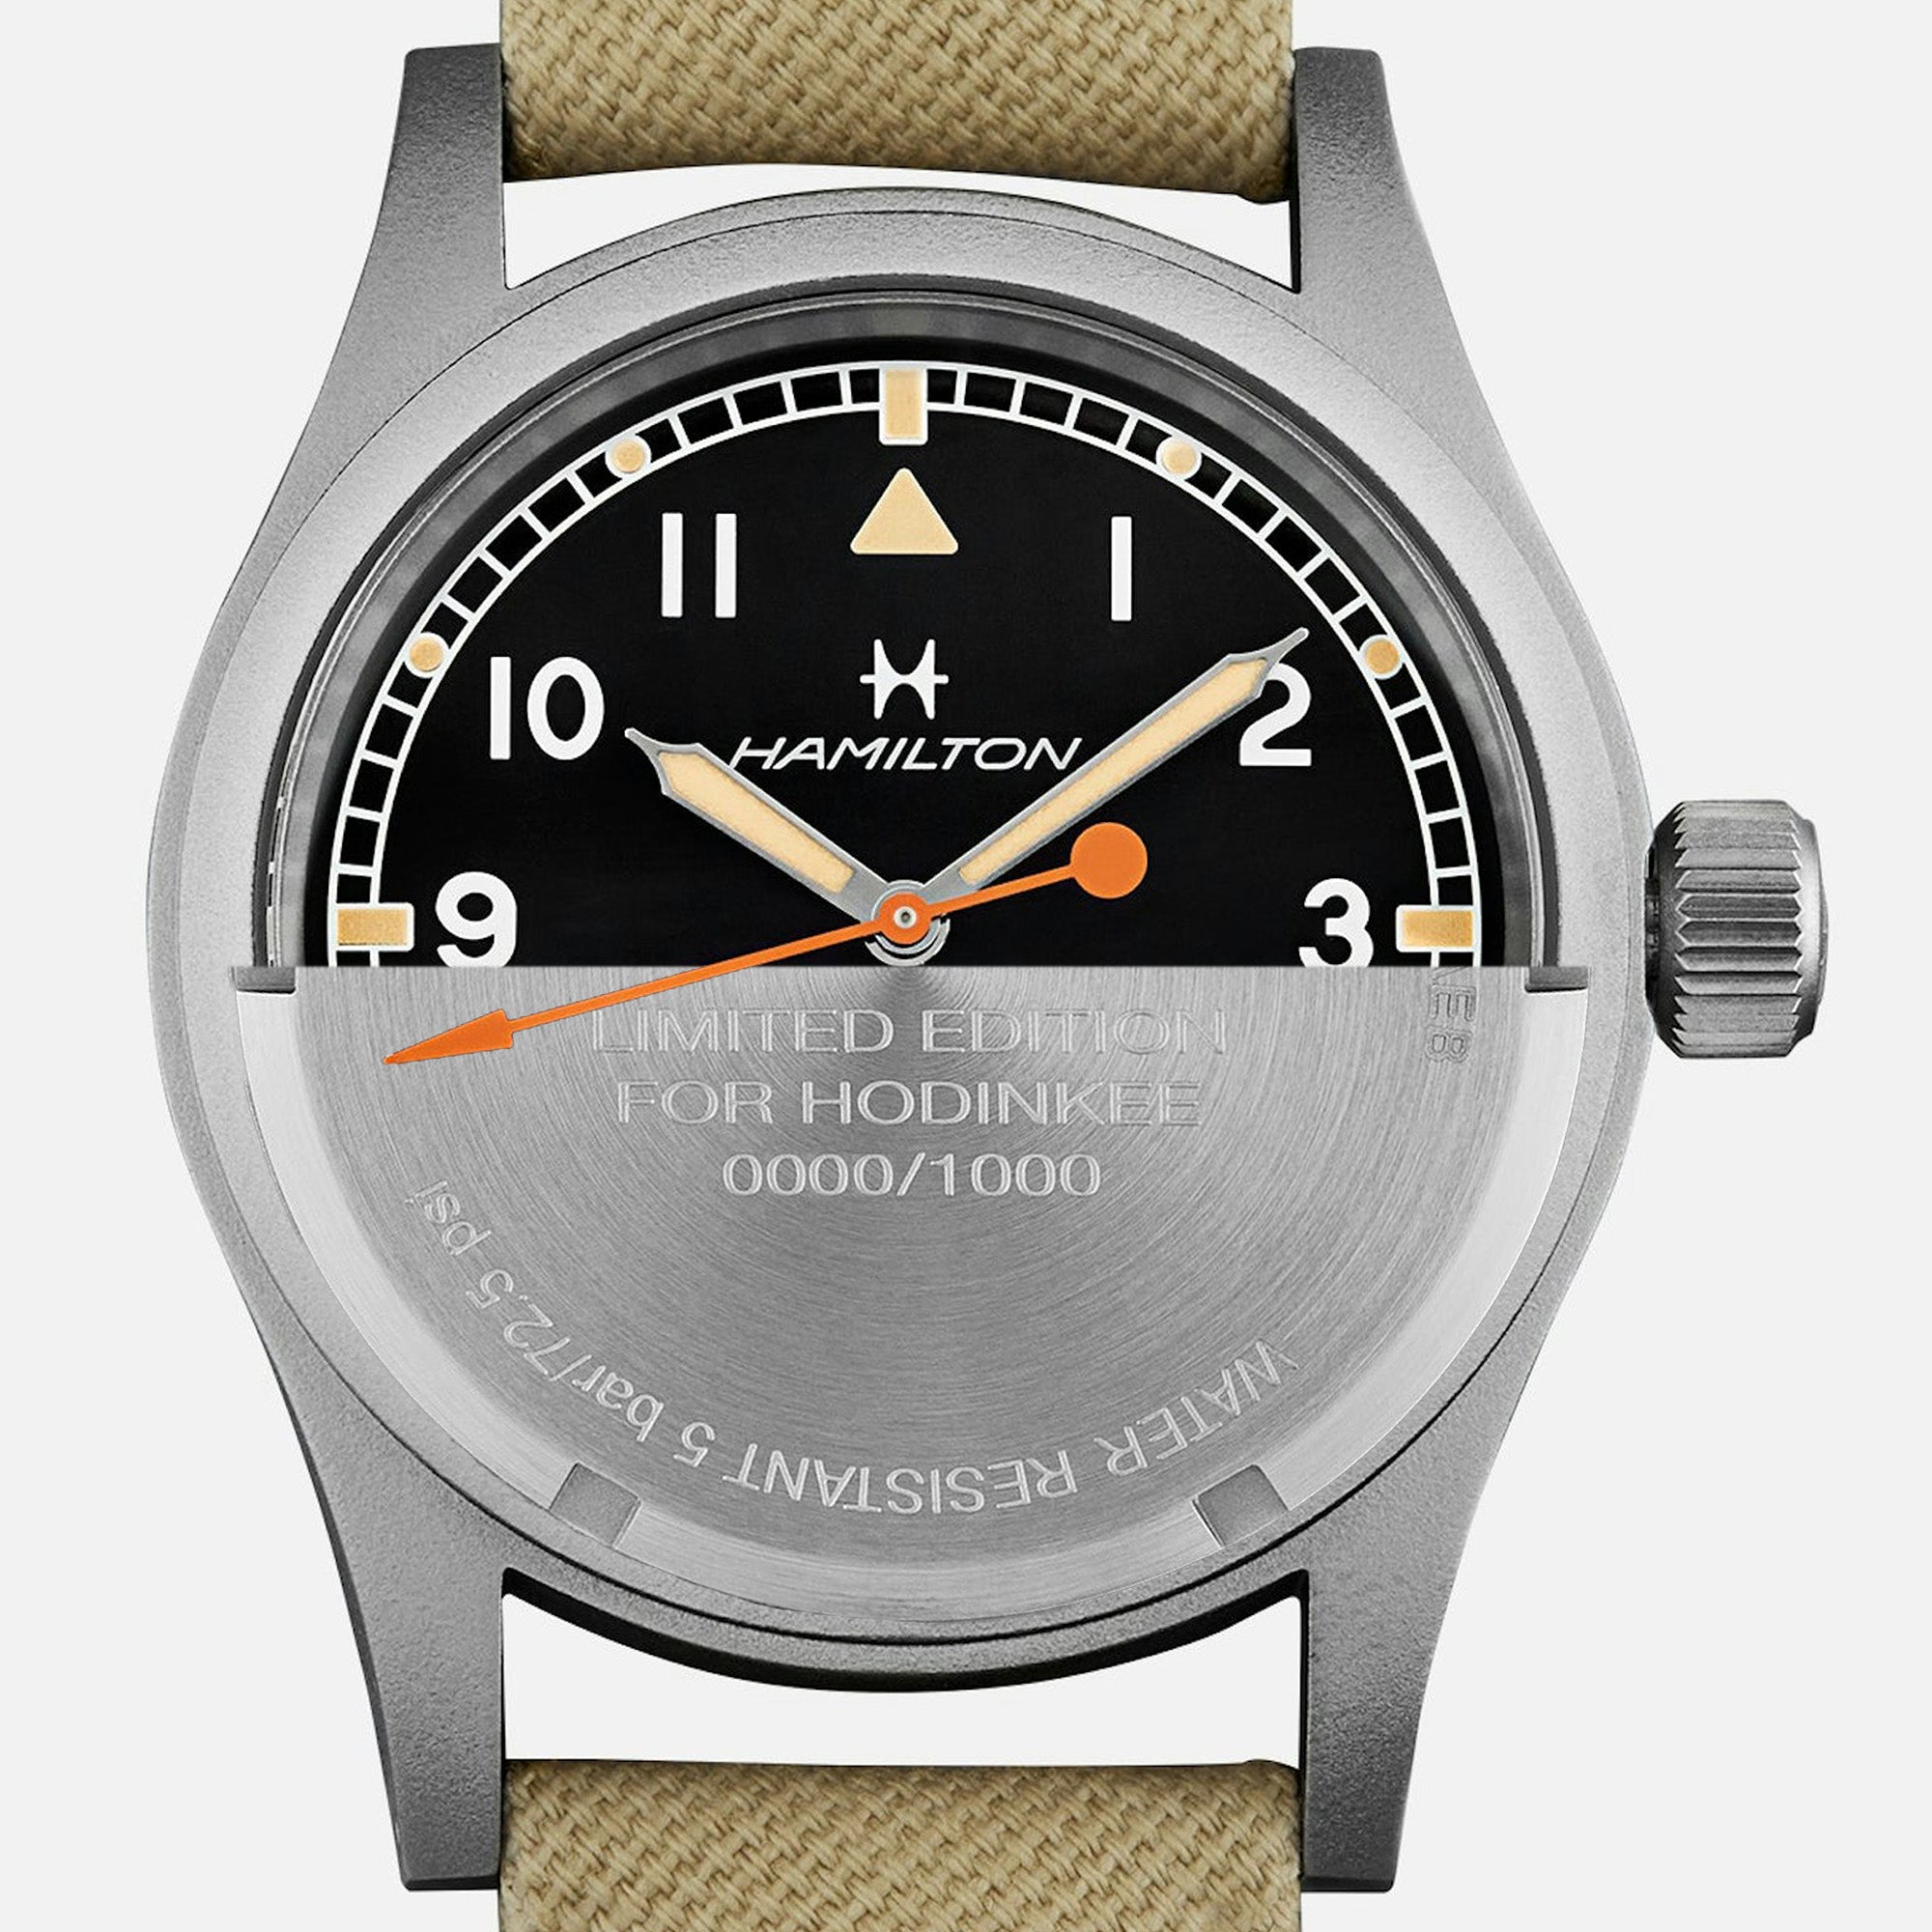 Hamilton Khaki Limited Edition For Hodinkee H89469930